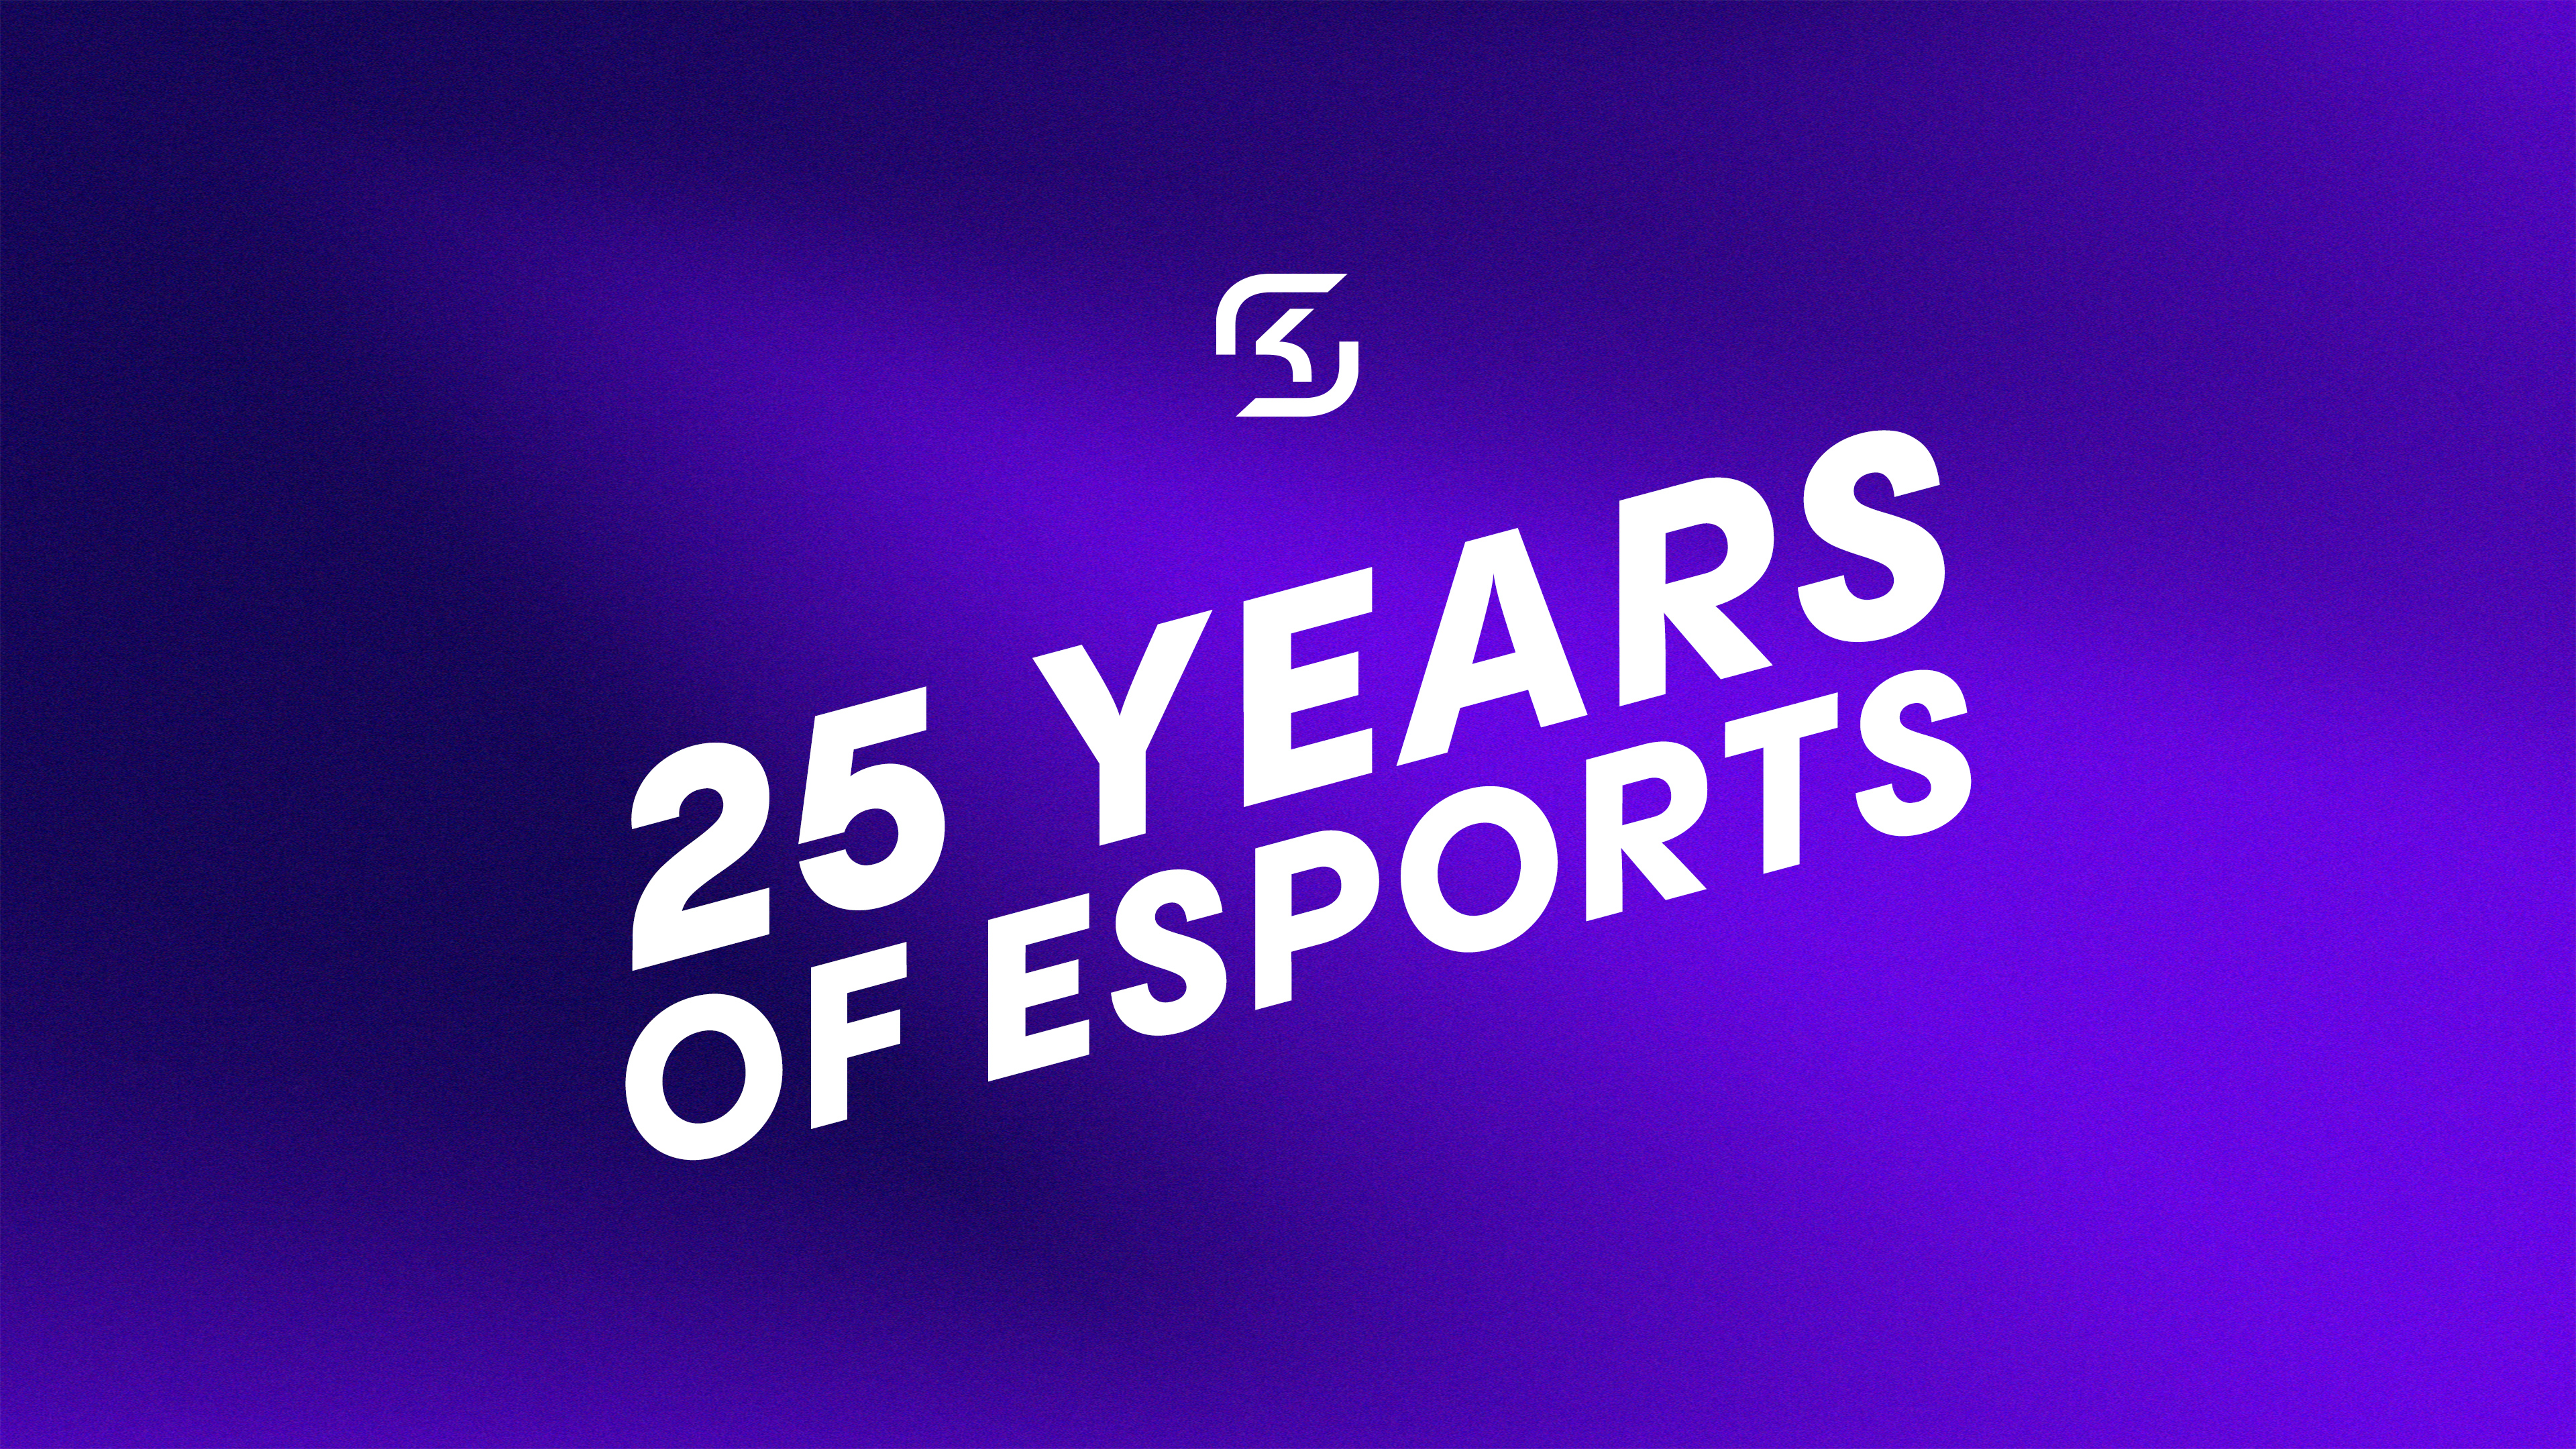 SK Gaming – 25 Years of Esports